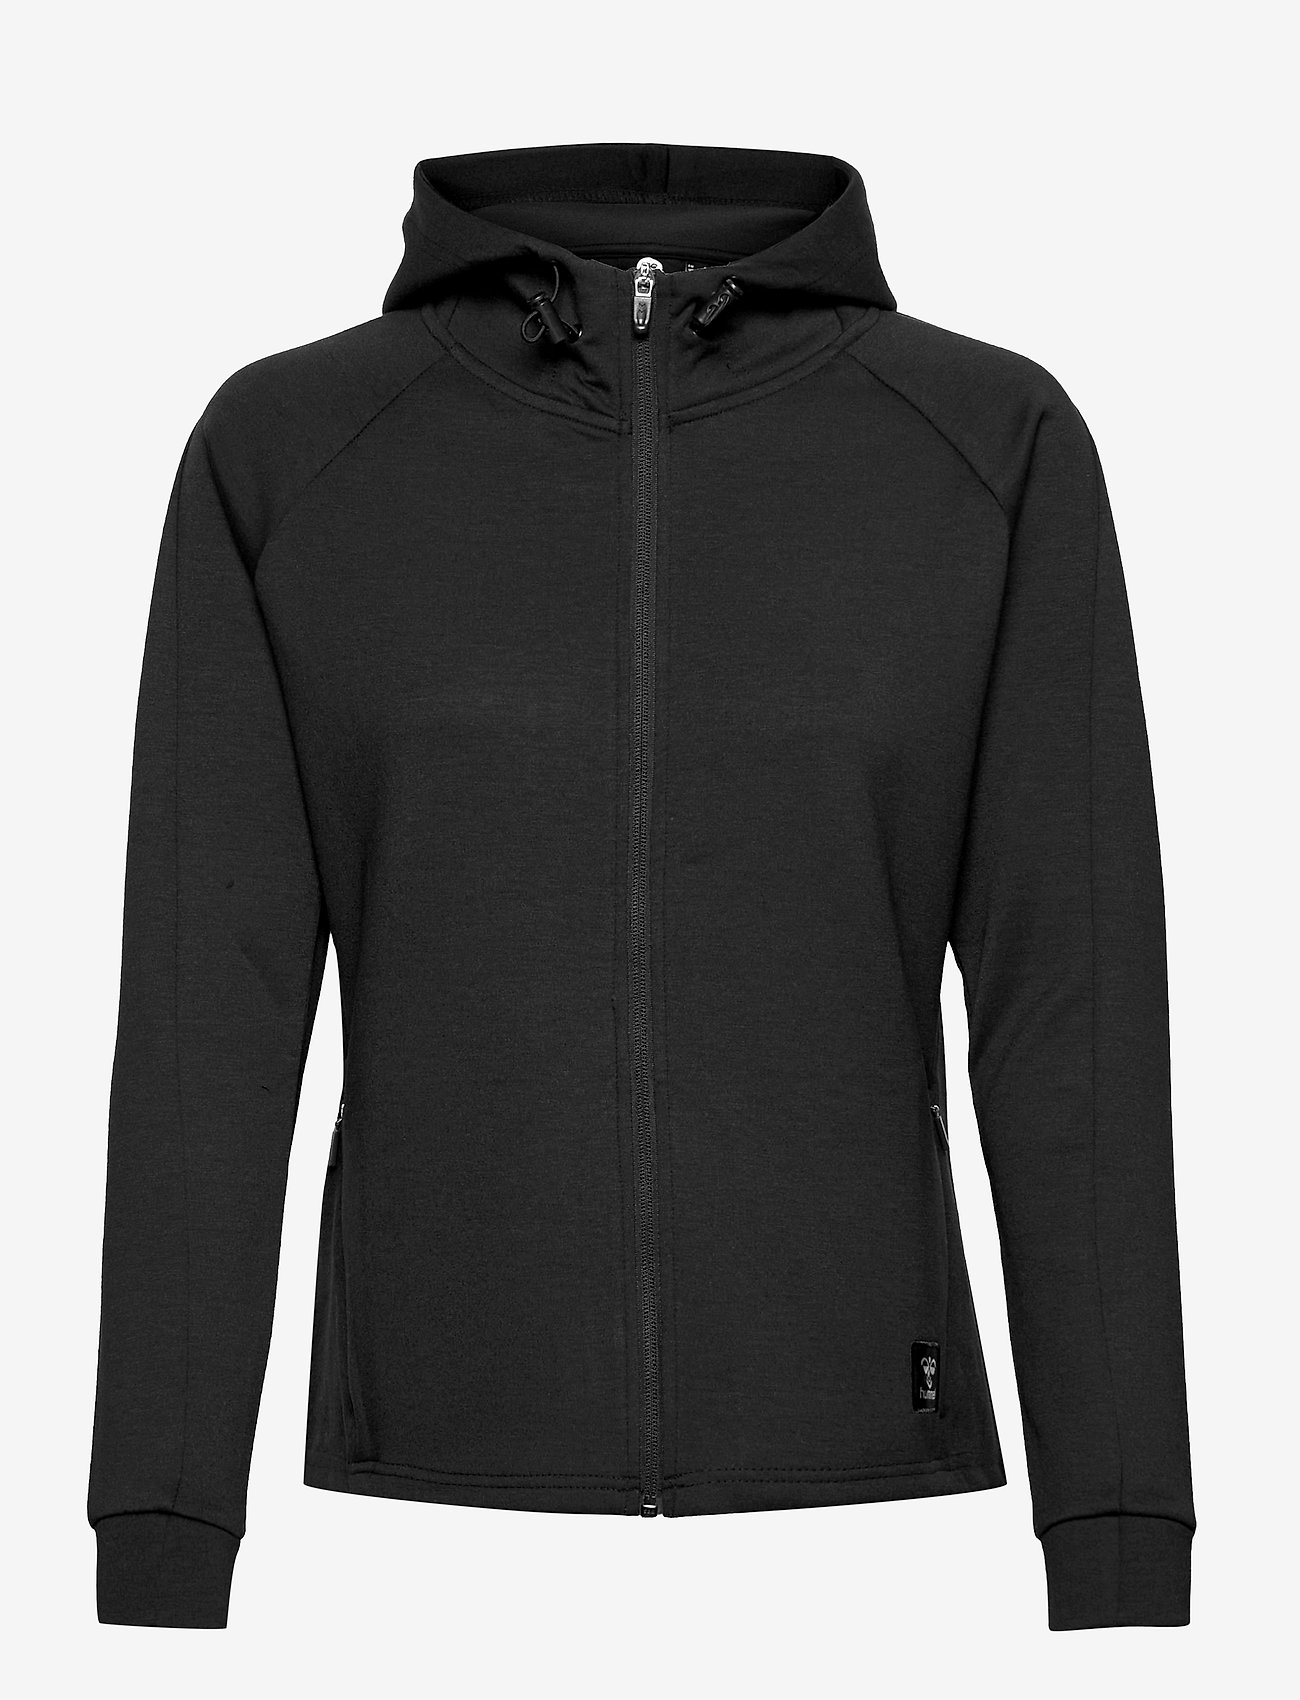 Hummel - hmlESSI ZIP HOODIE - mid layer jackets - black - 0